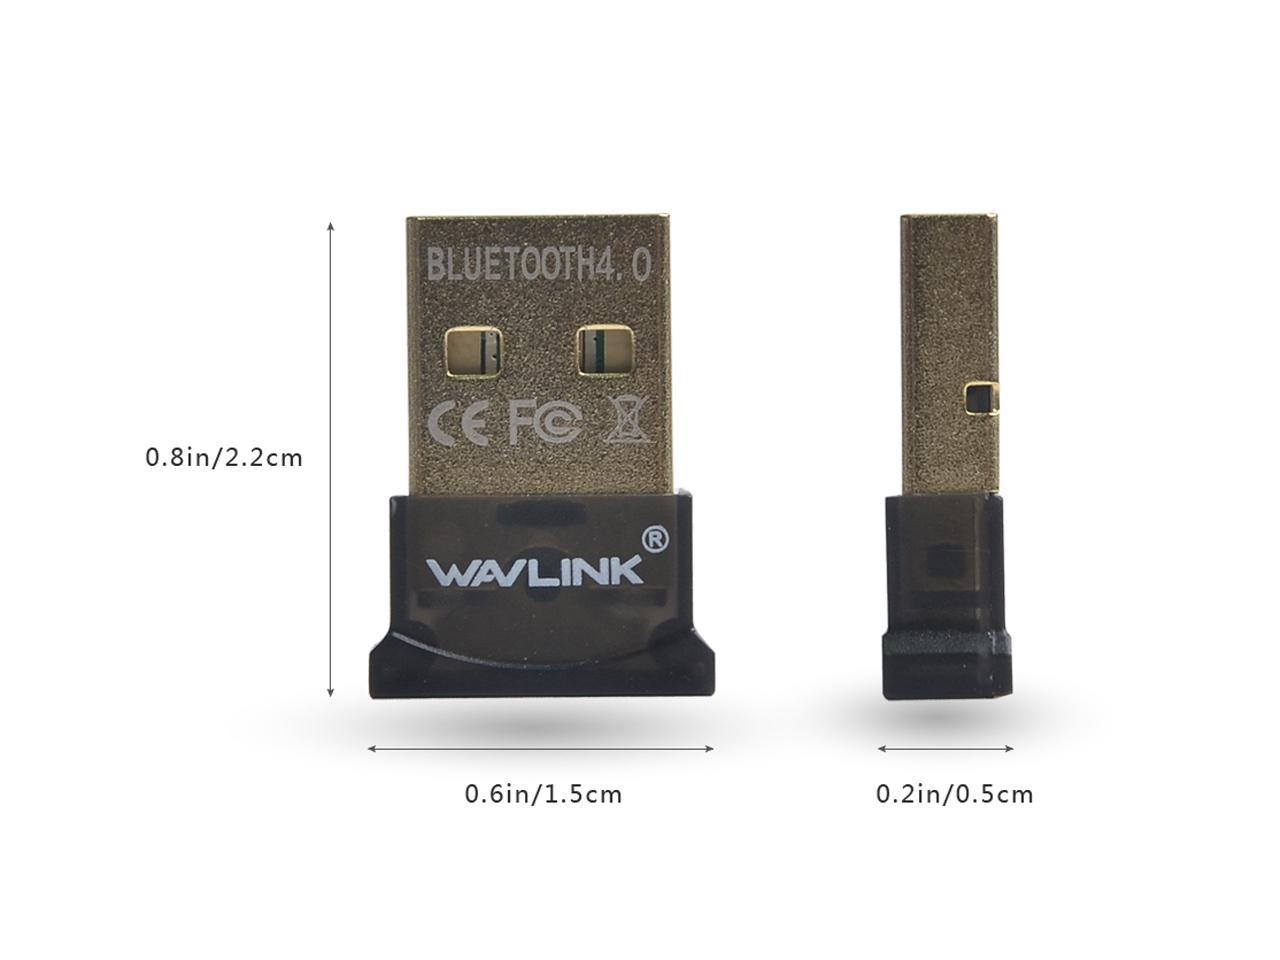 wavlink nano wireless bluetooth csr 4.0 dongle driver error